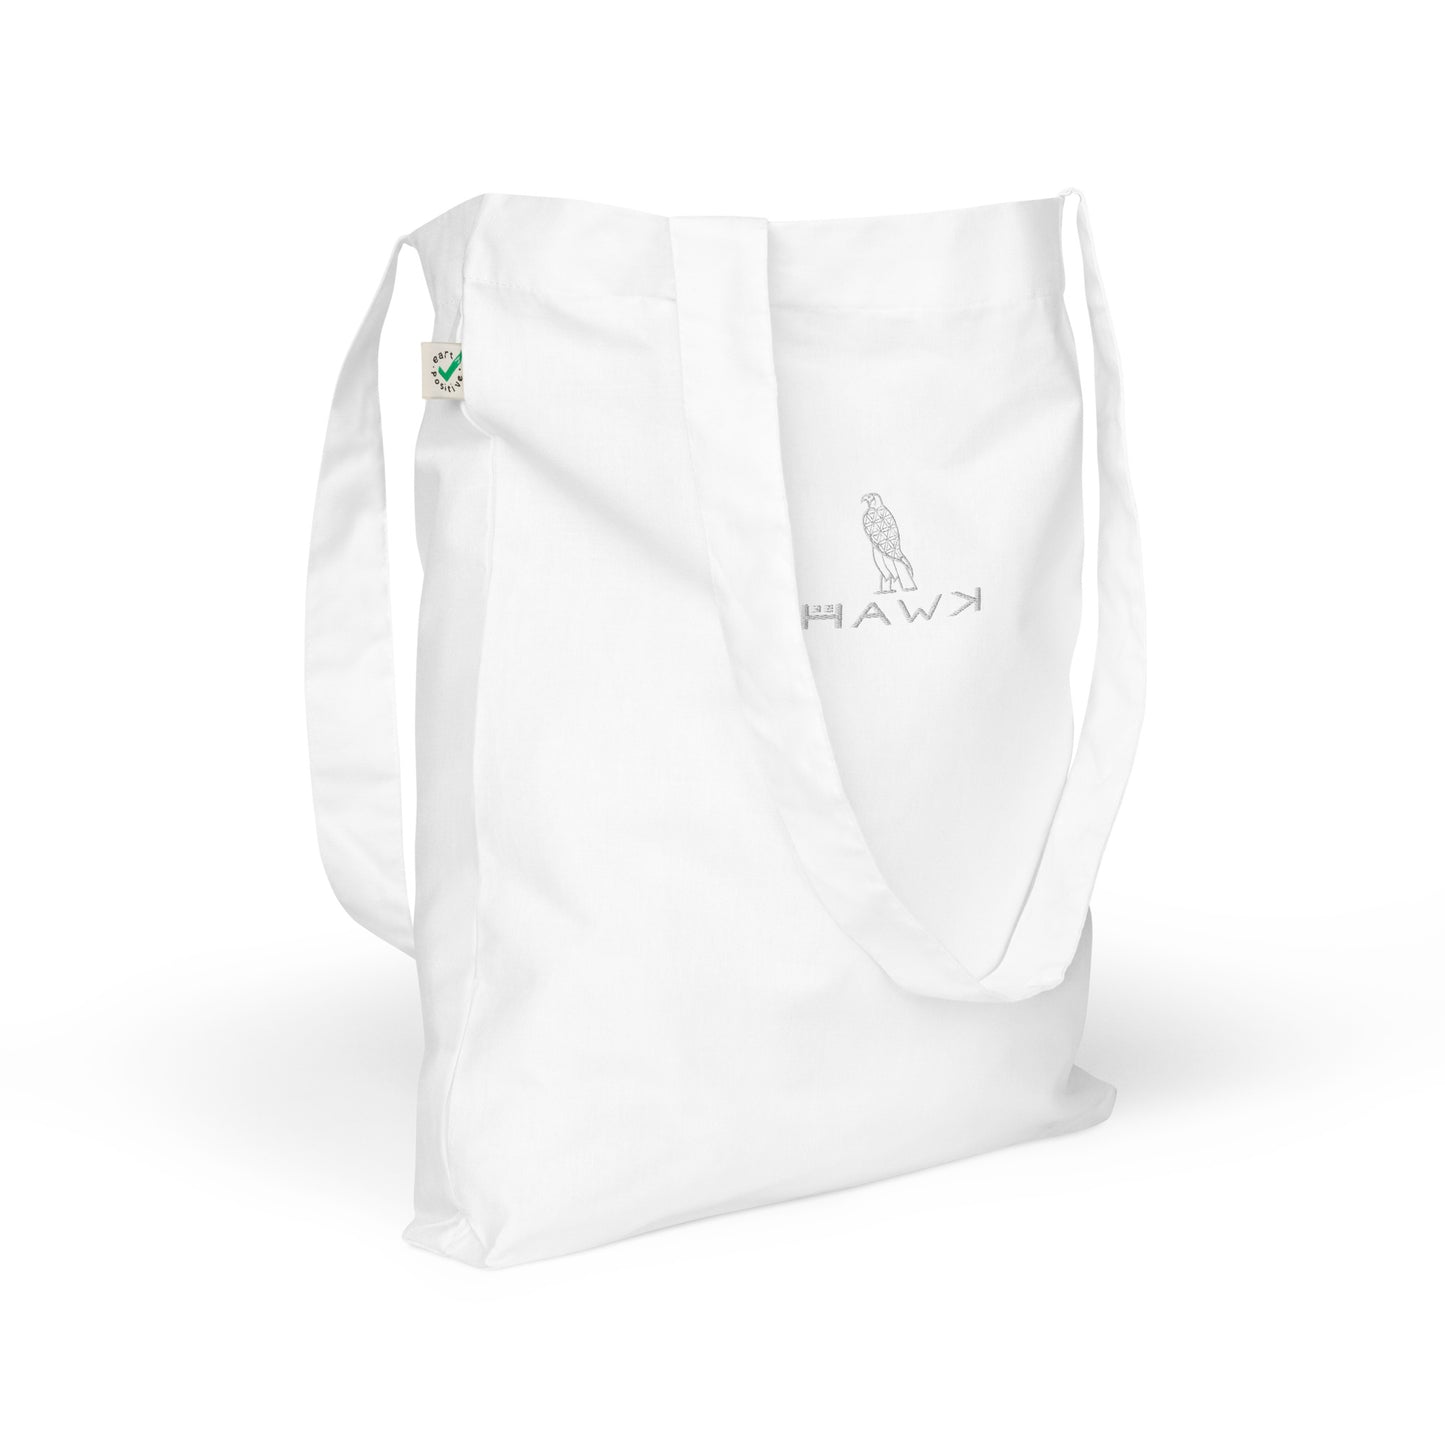 BE HAWK - cloth bag (organic cotton)